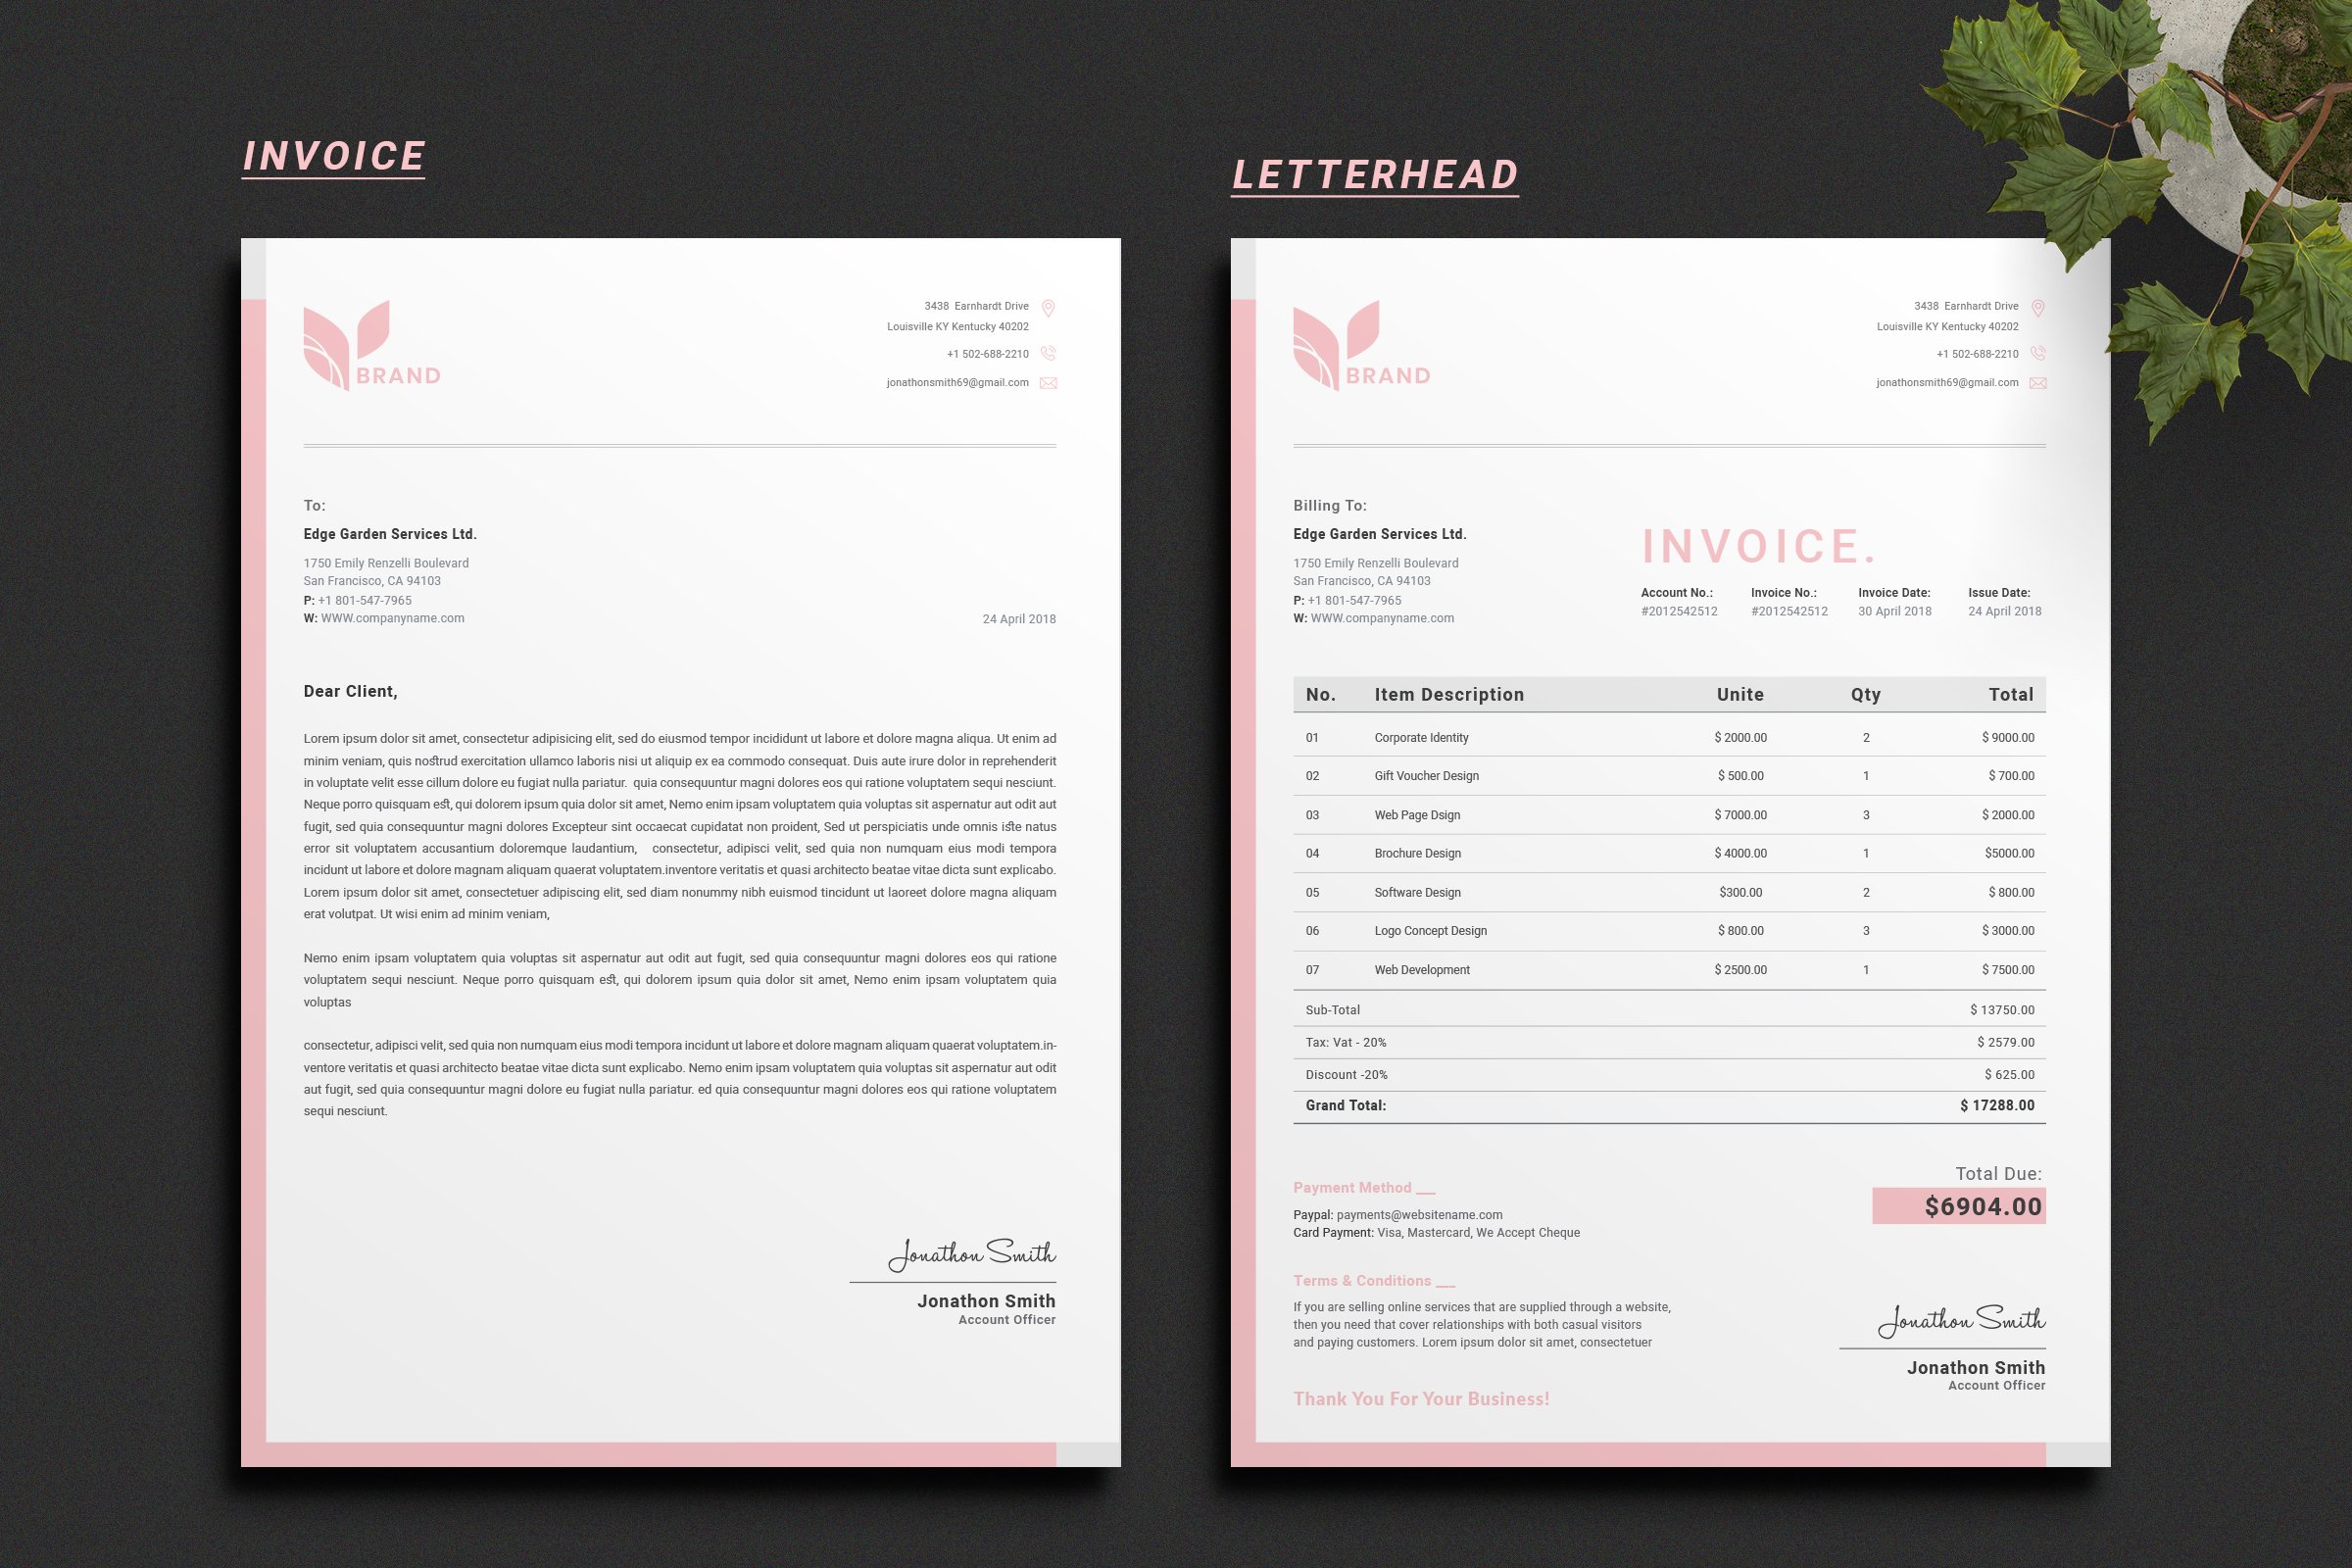 Invoice + Letterhead preview image.